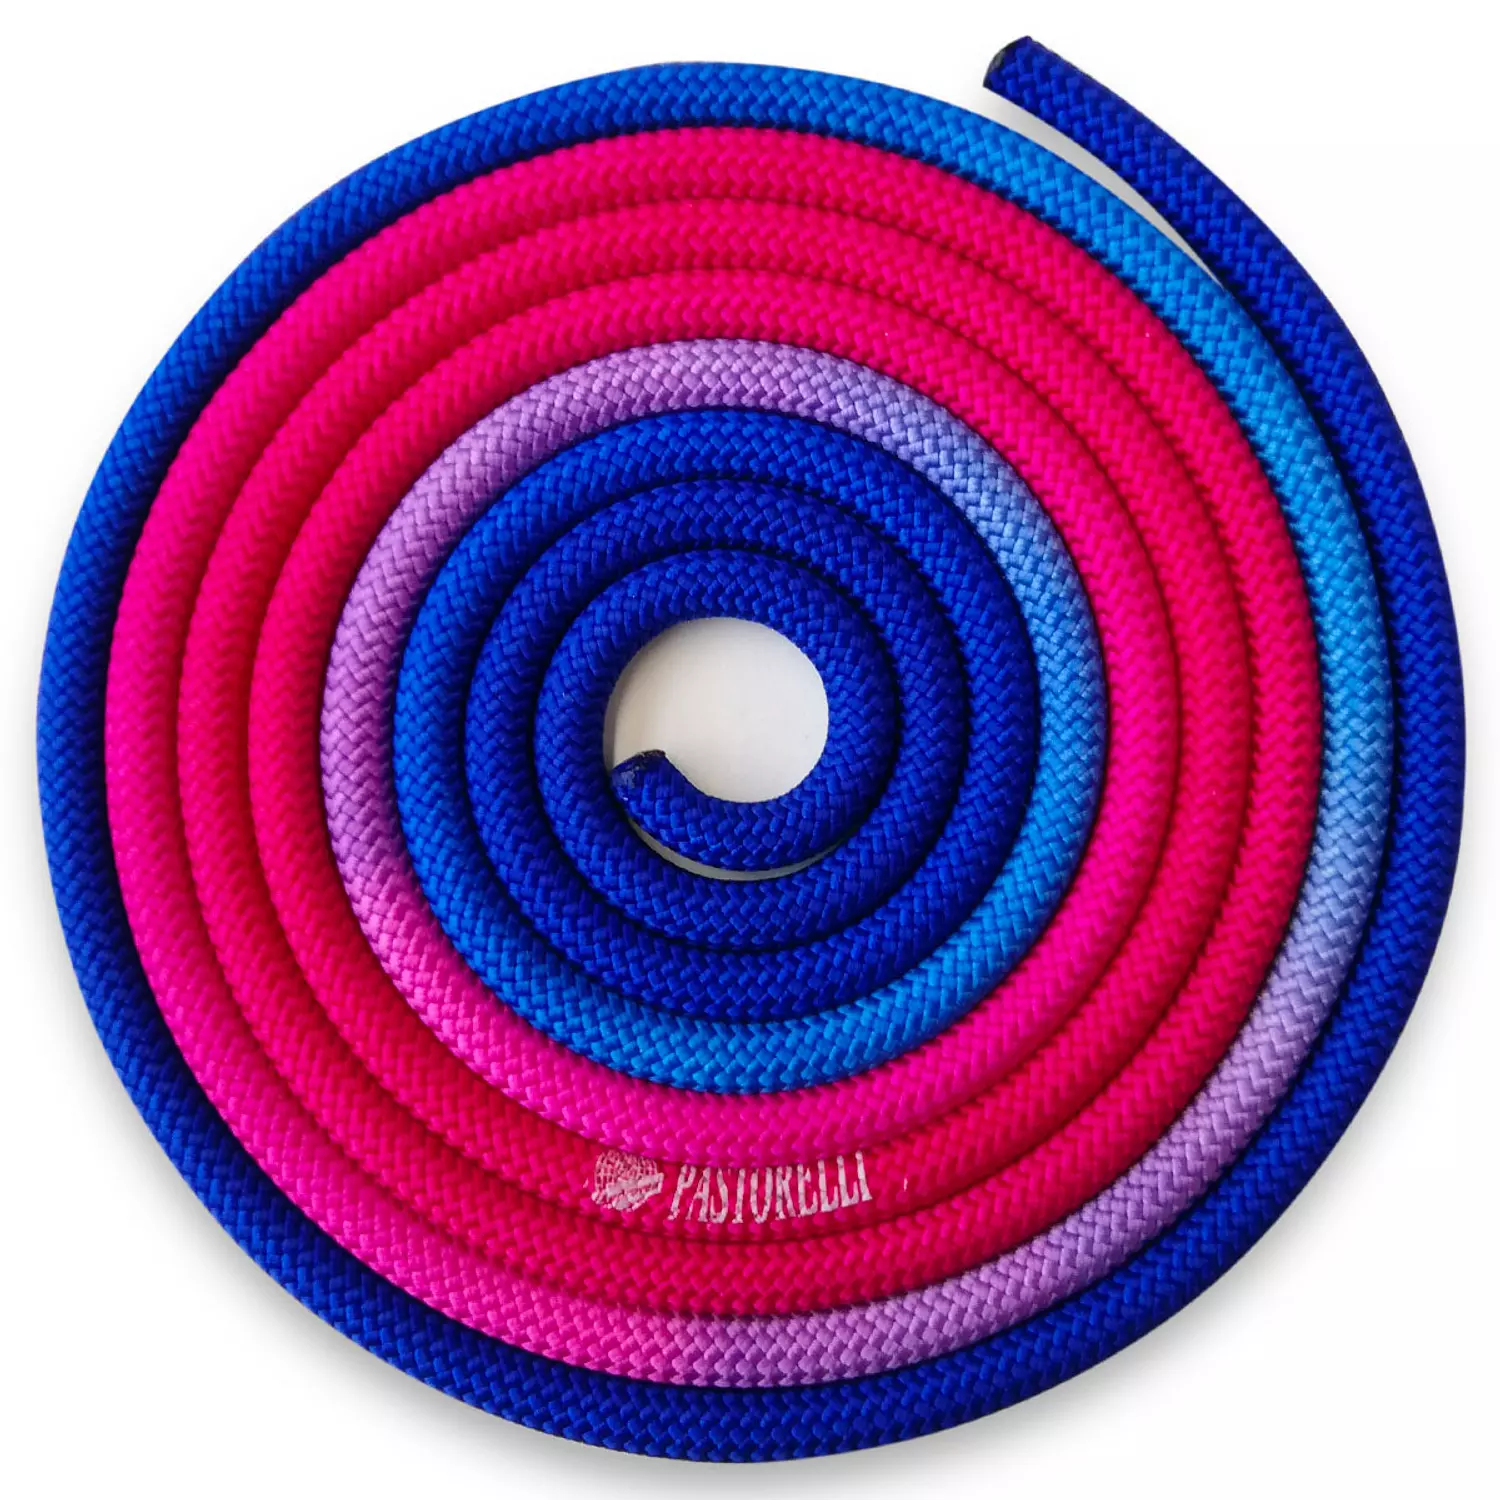 Pastorelli-New Orleans multicolor rope FIG | 3m 8